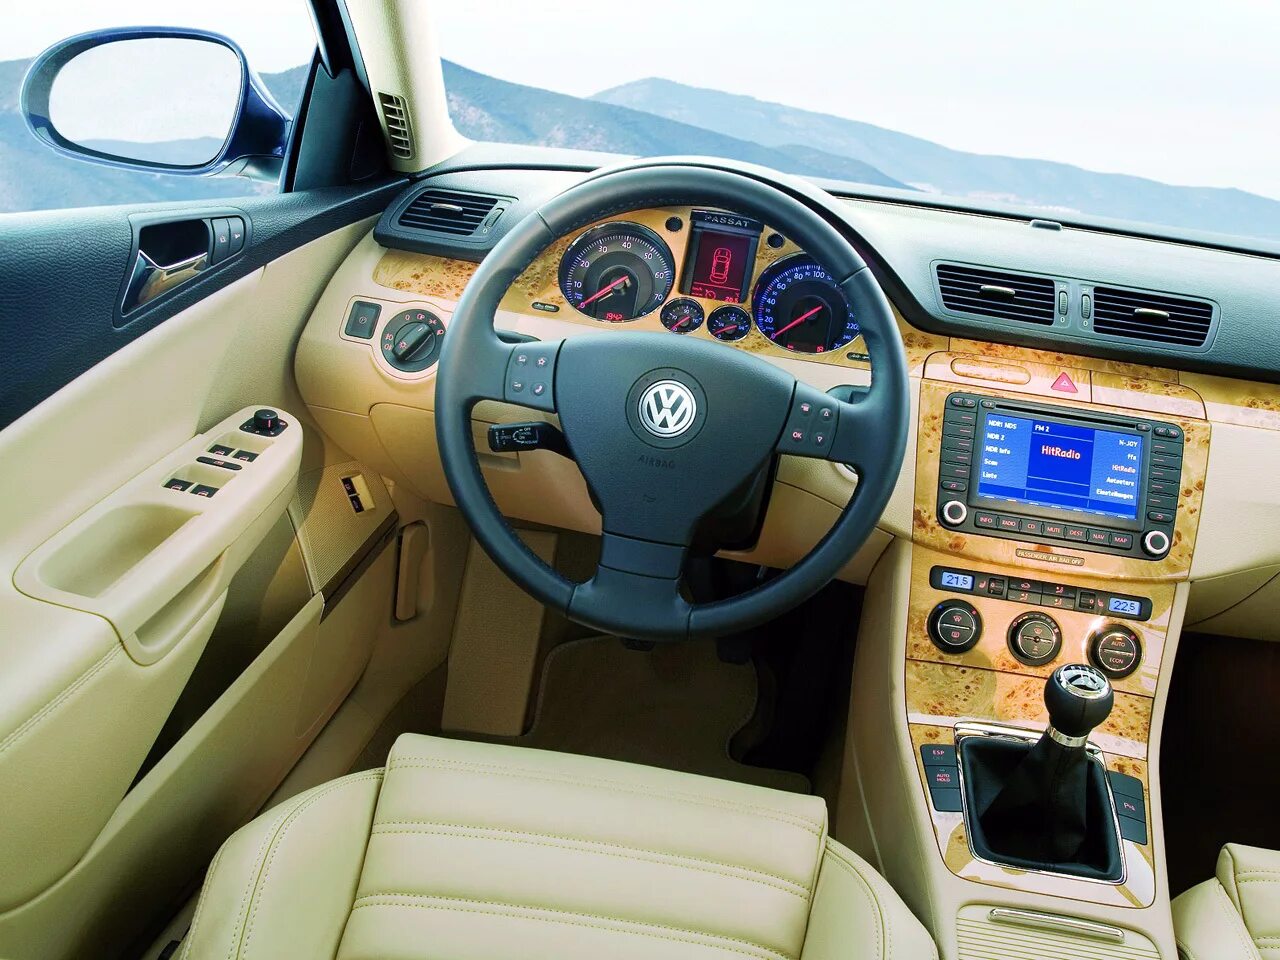 Пассат б6 драйв. Фольксваген Пассат b6 салон. Volkswagen Passat 2006 салон. Volkswagen Passat b6 салон. Volkswagen Passat 2005 Interior.